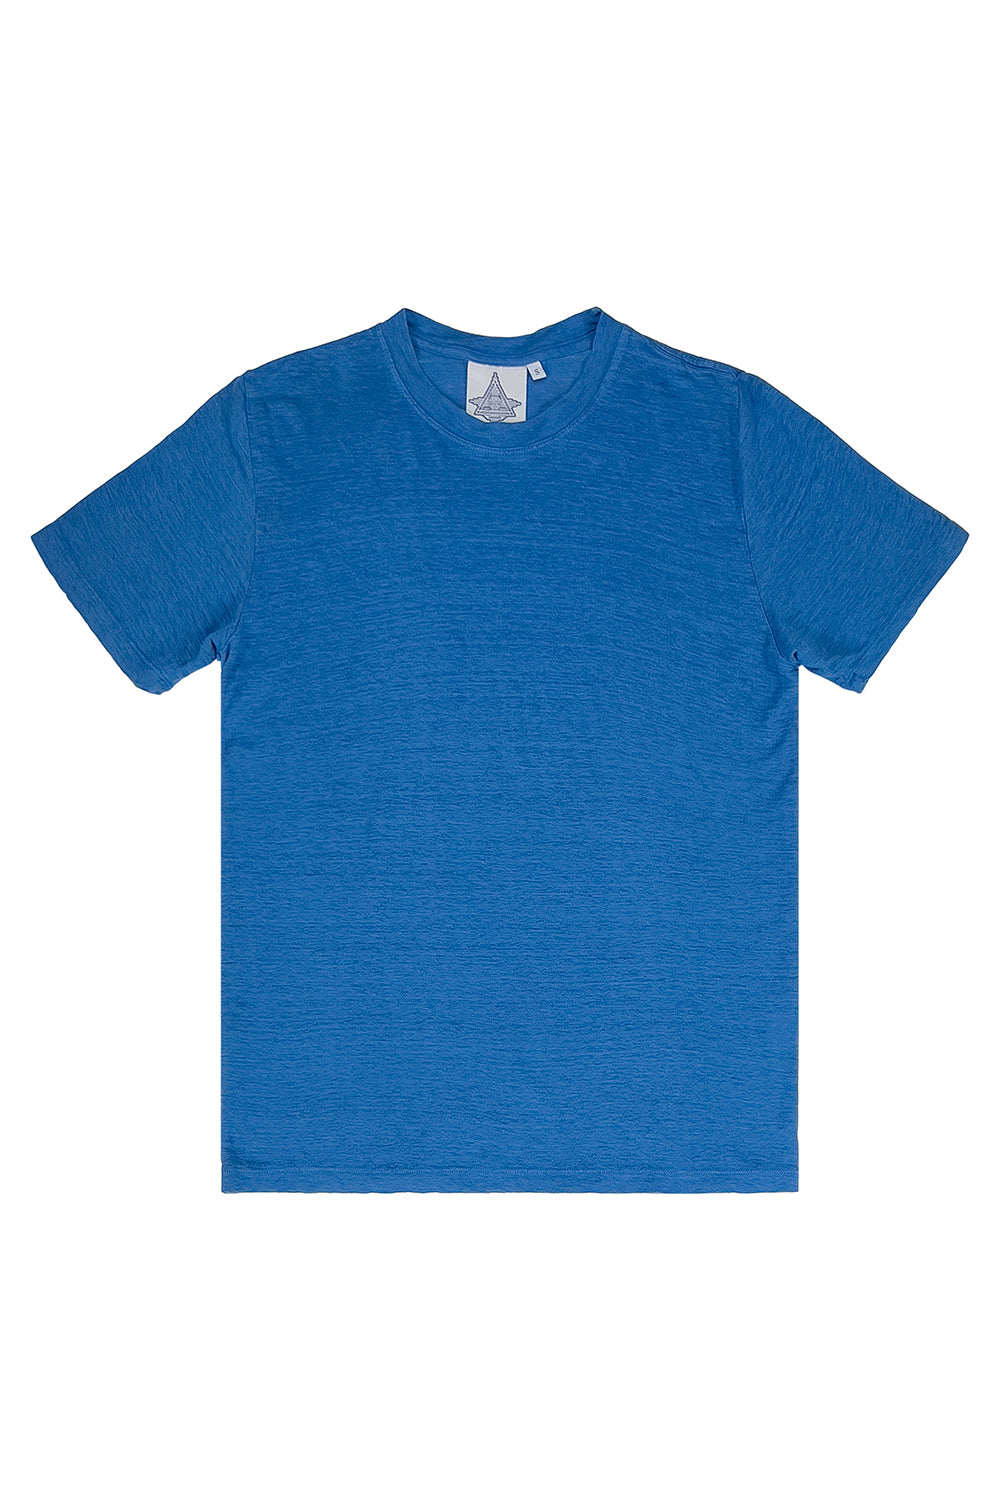 Mana 7 - 100% Hemp Tee | Jungmaven Hemp Clothing & Accessories / Color: Galaxy Blue